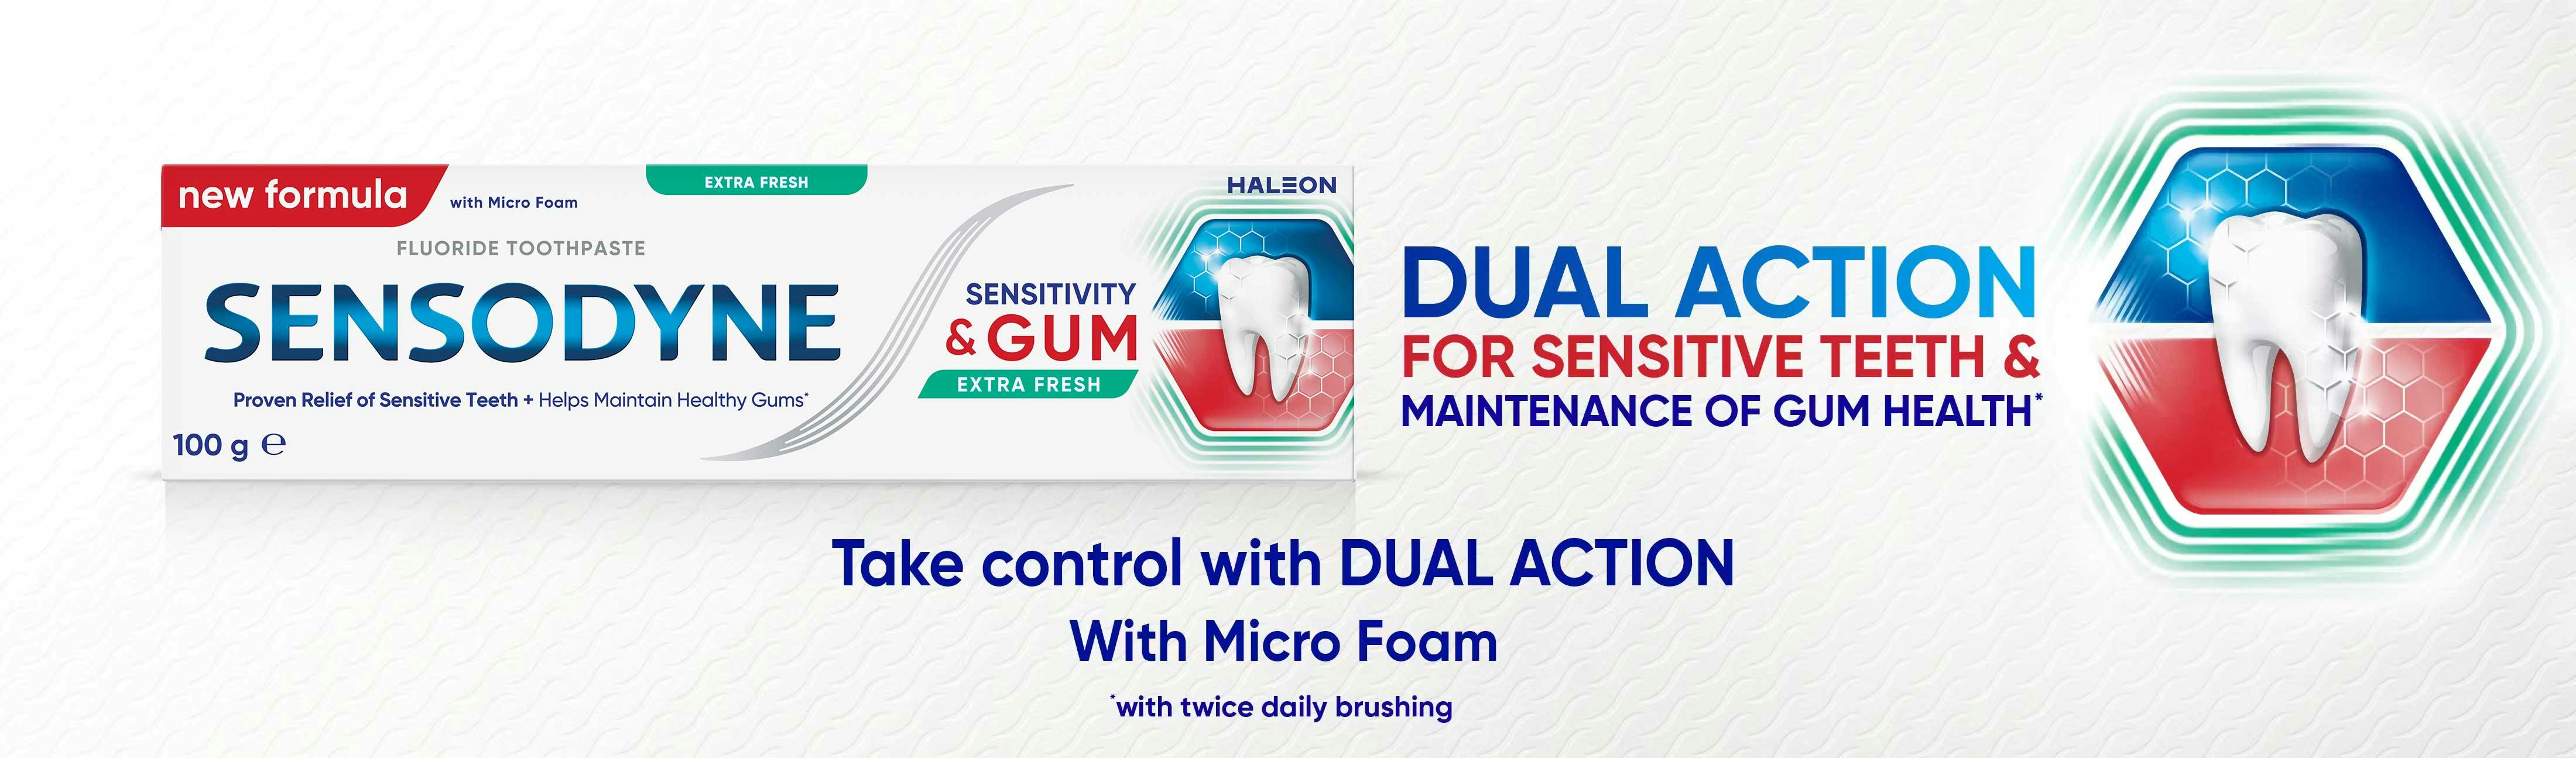 Sensodyne Sensitivity & Gum Toothpaste Extra Fresh Banner